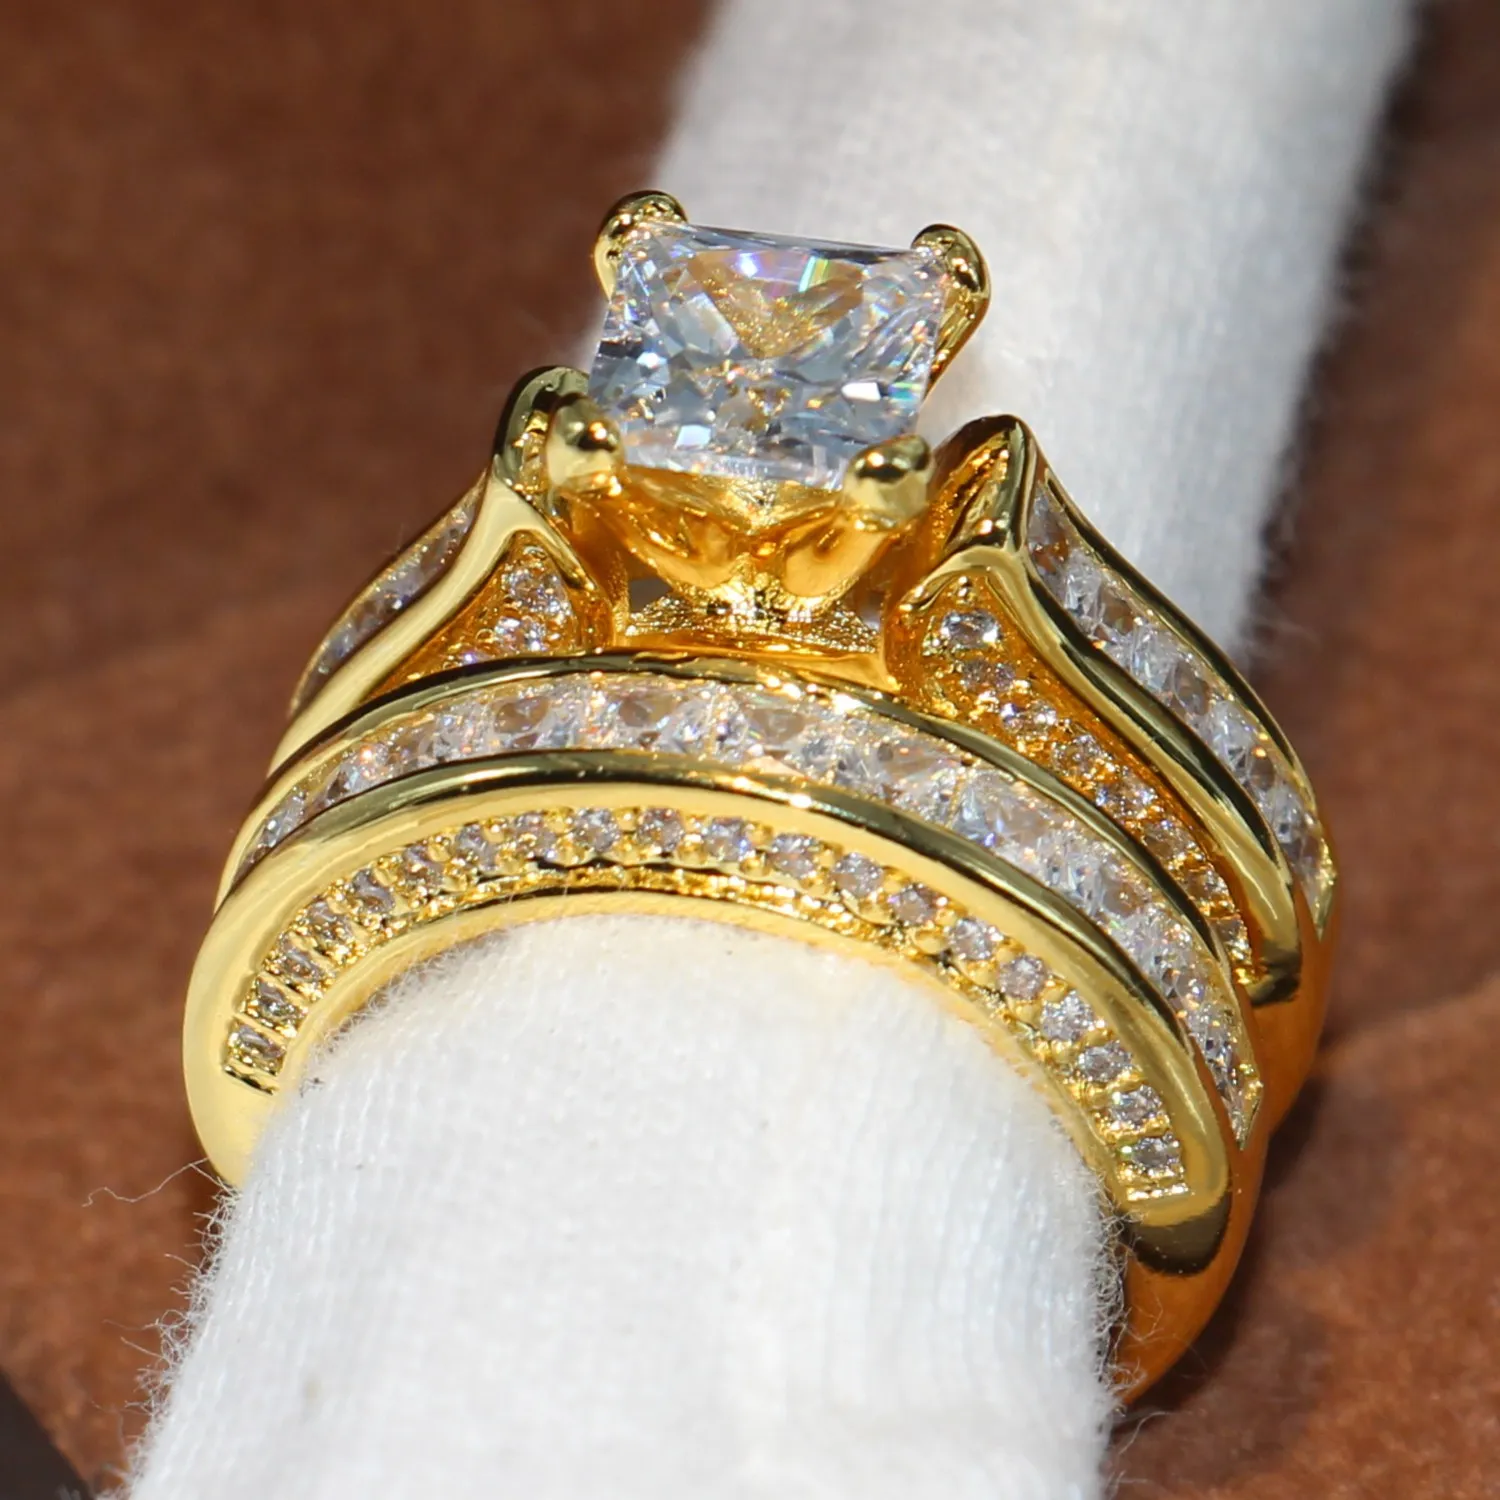 Size 5-11 Sparkling Fashion Jewelry Square 14KT Yellow Gold Filled Princess Cut White Topaz Party Gemstones CZ Diamond Women Weddi324v